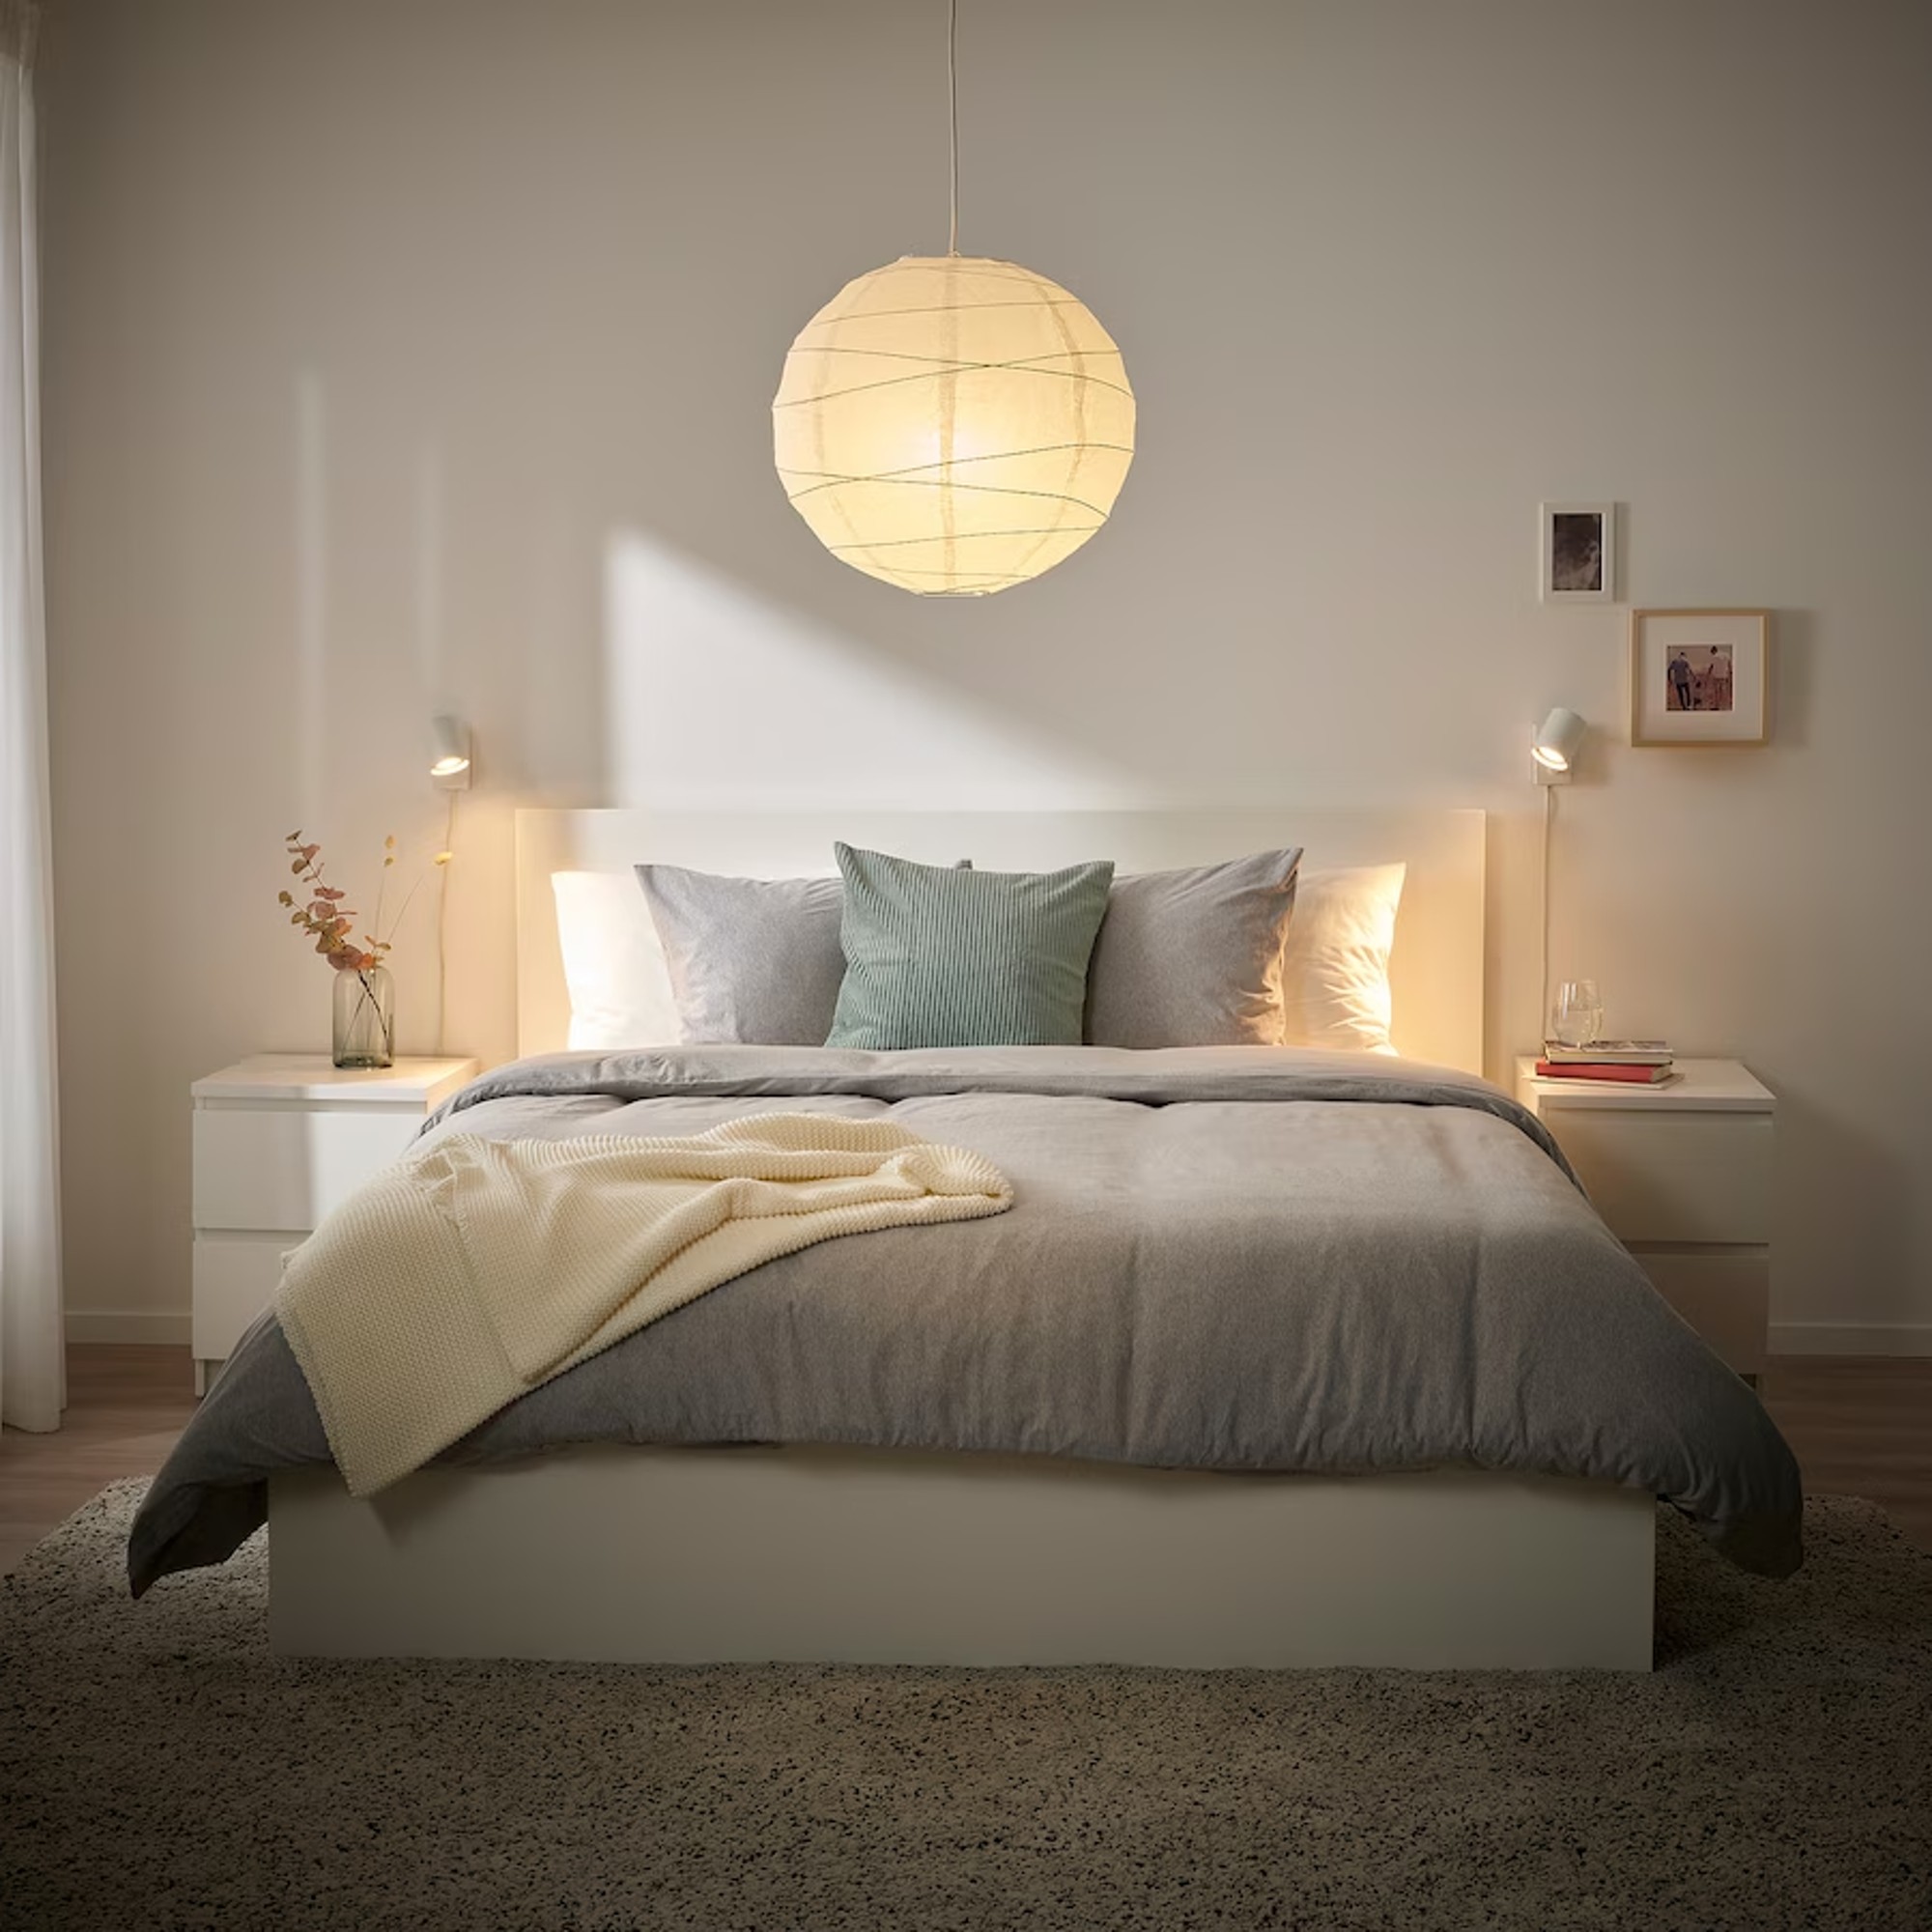 IKEA REGOLIT pendant lamp shade in neutral bedroom